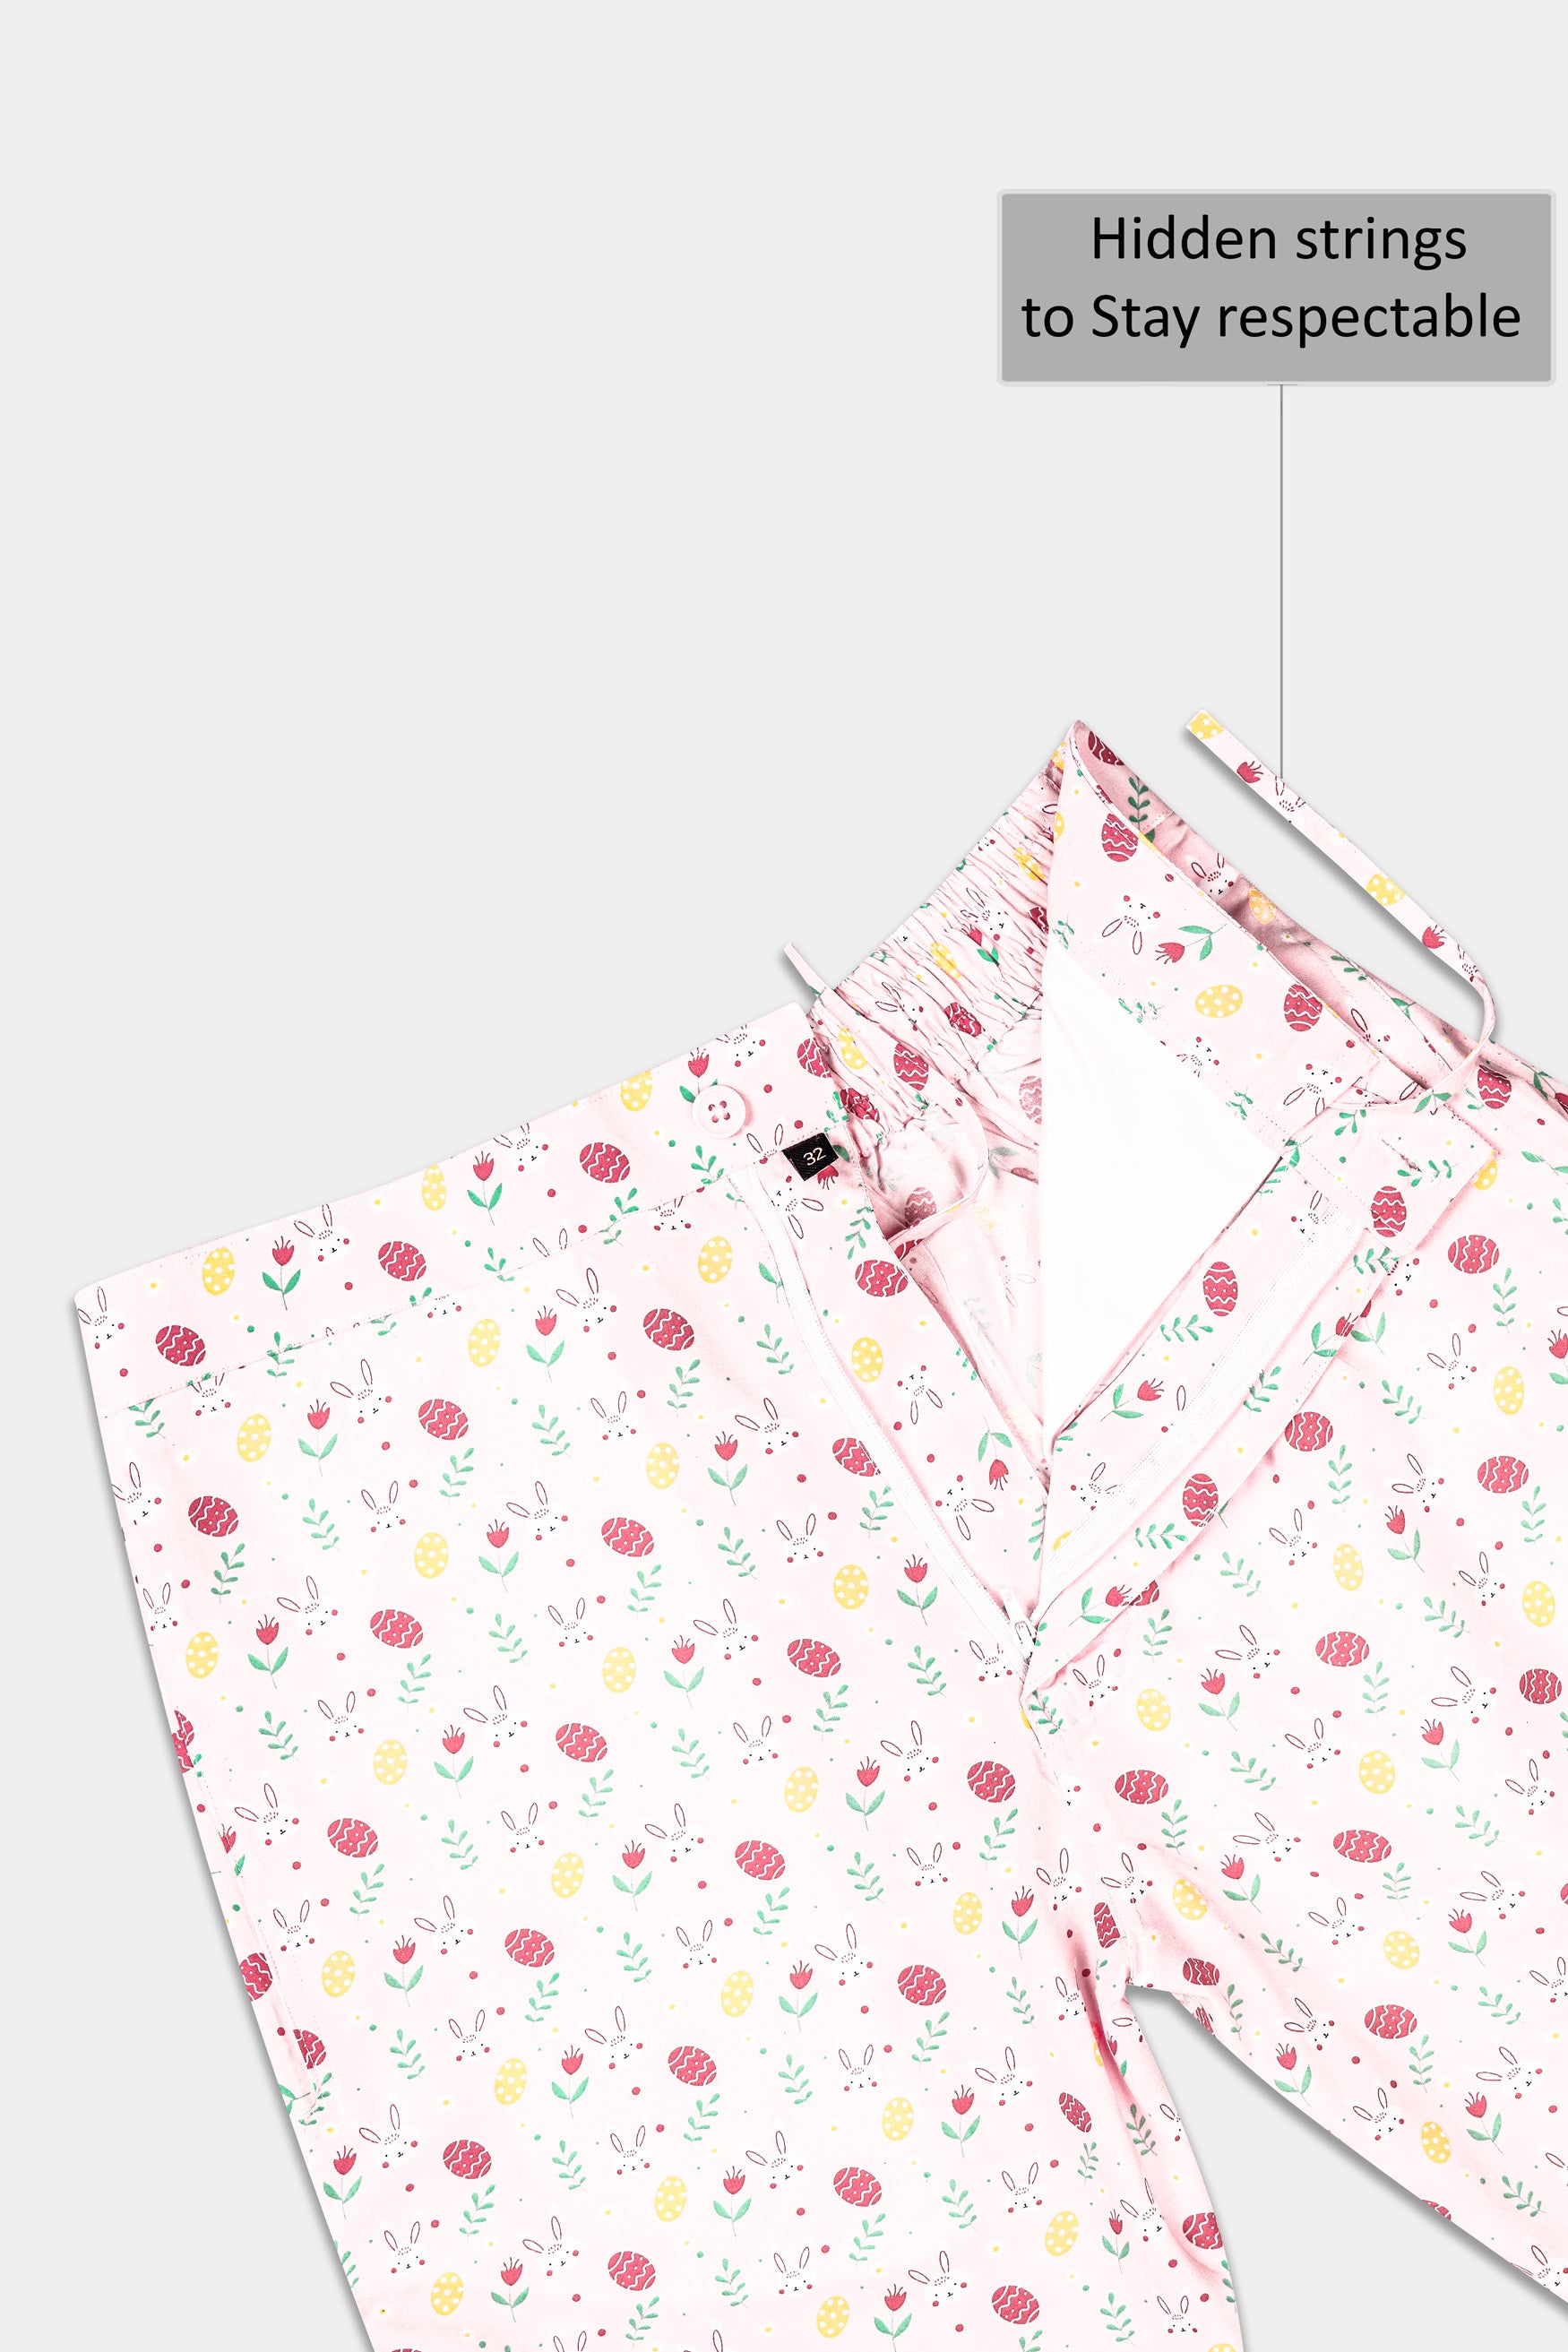 Crepe Pink with Grandis Yellow Multicolor Printed Premium Cotton Shorts SR345-28,  SR345-30,  SR345-32,  SR345-34,  SR345-36,  SR345-38,  SR345-40,  SR345-42,  SR345-44